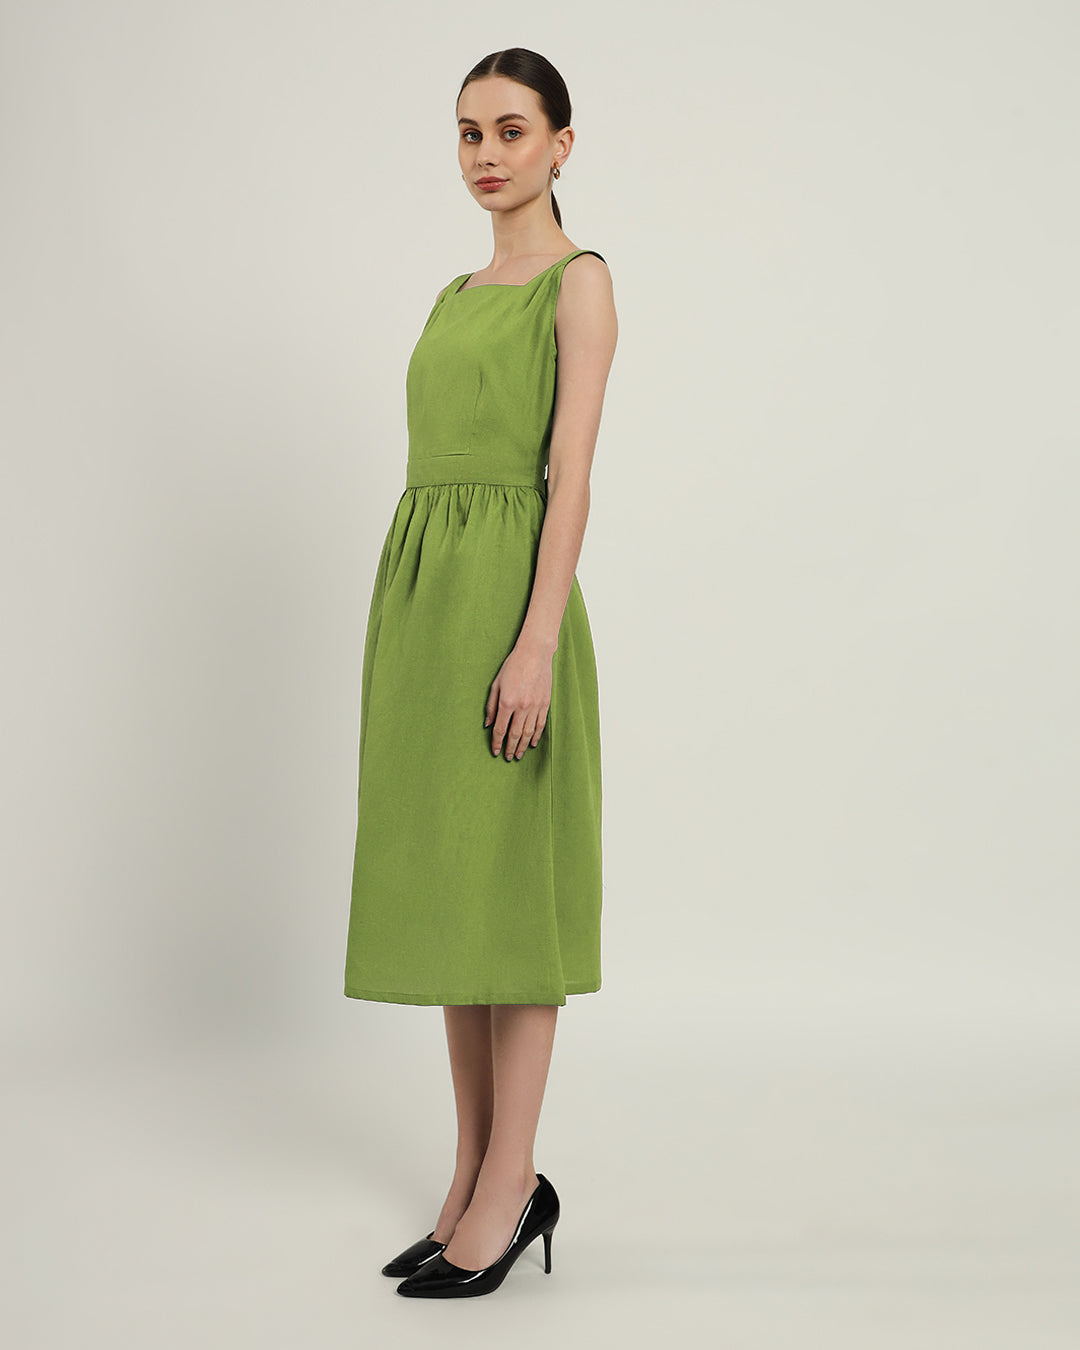 The Mihara Fern Cotton Dress